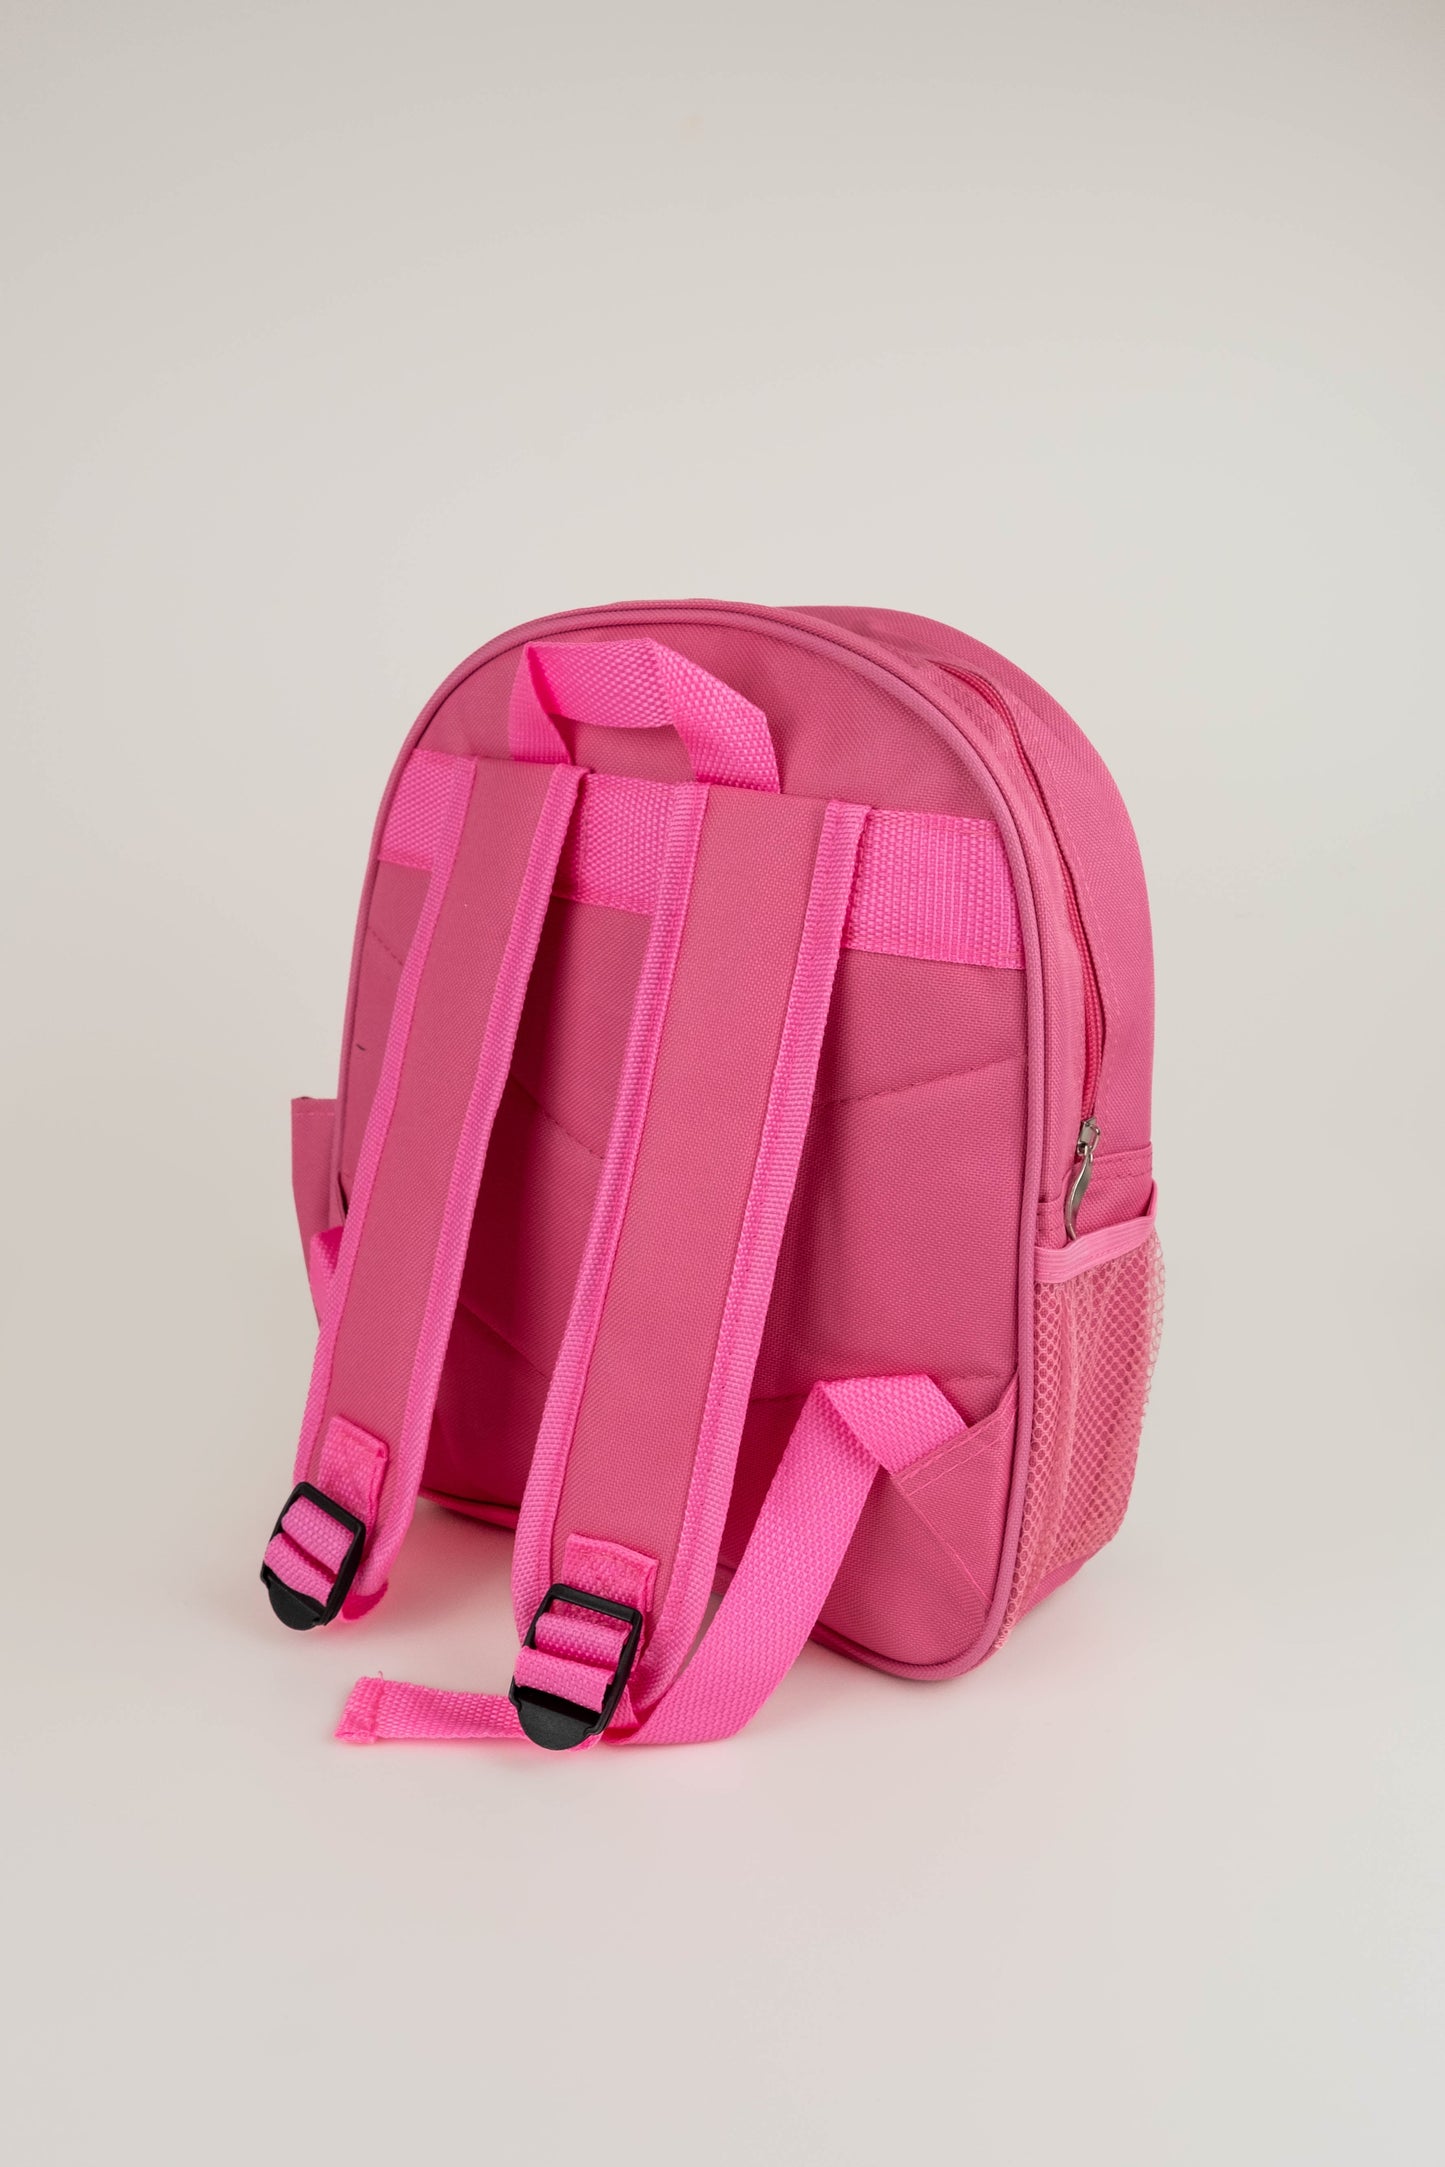 Children’s Personalised Backpack - Bunny Design